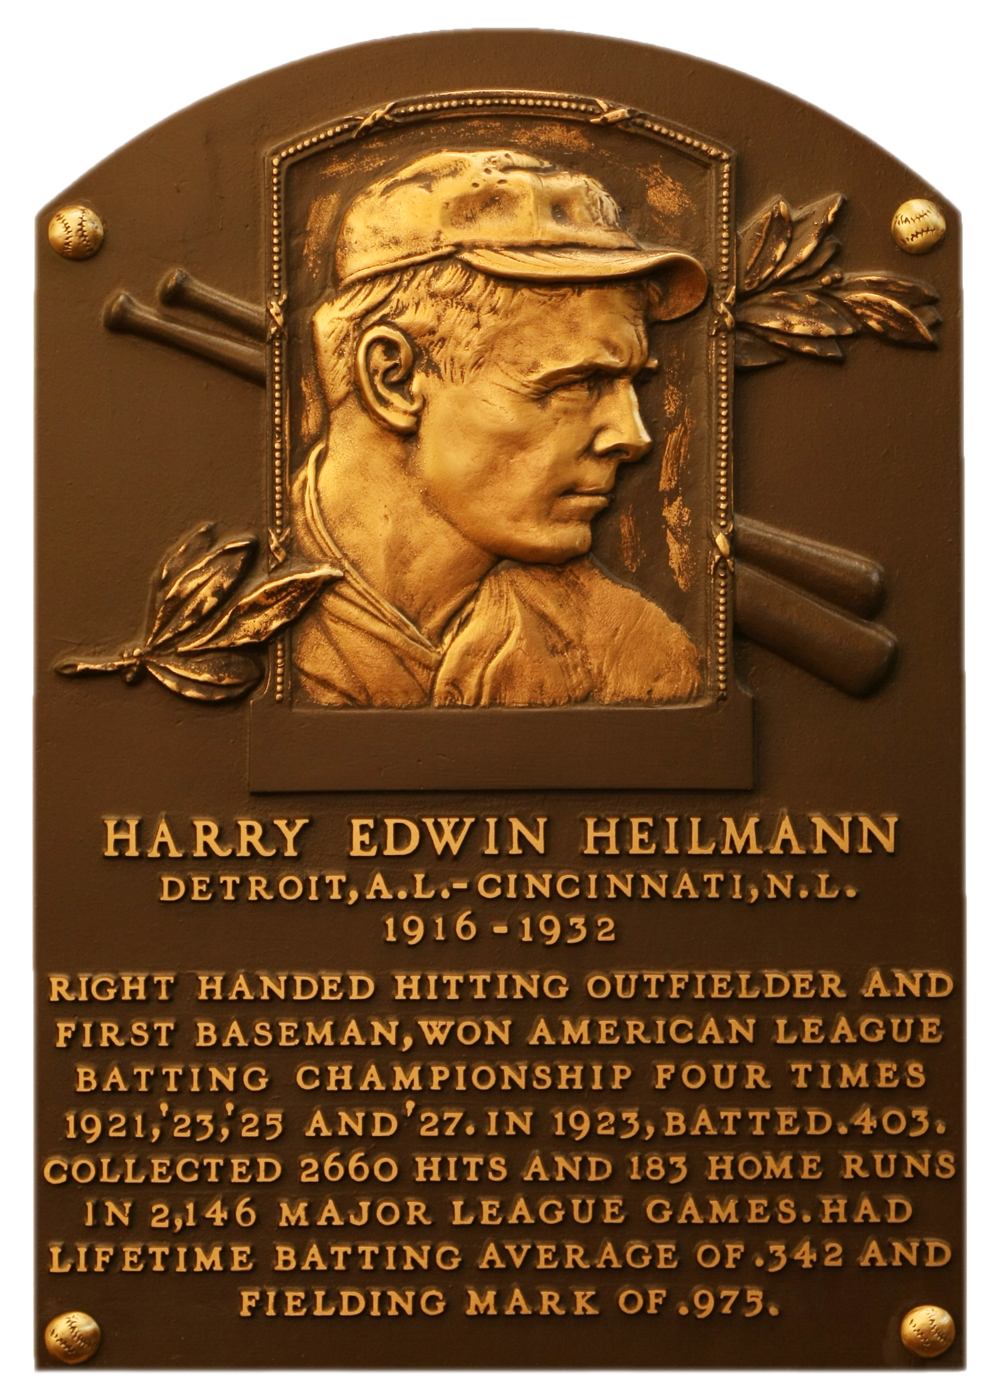 Harry Heilmann Hall of Fame plaque